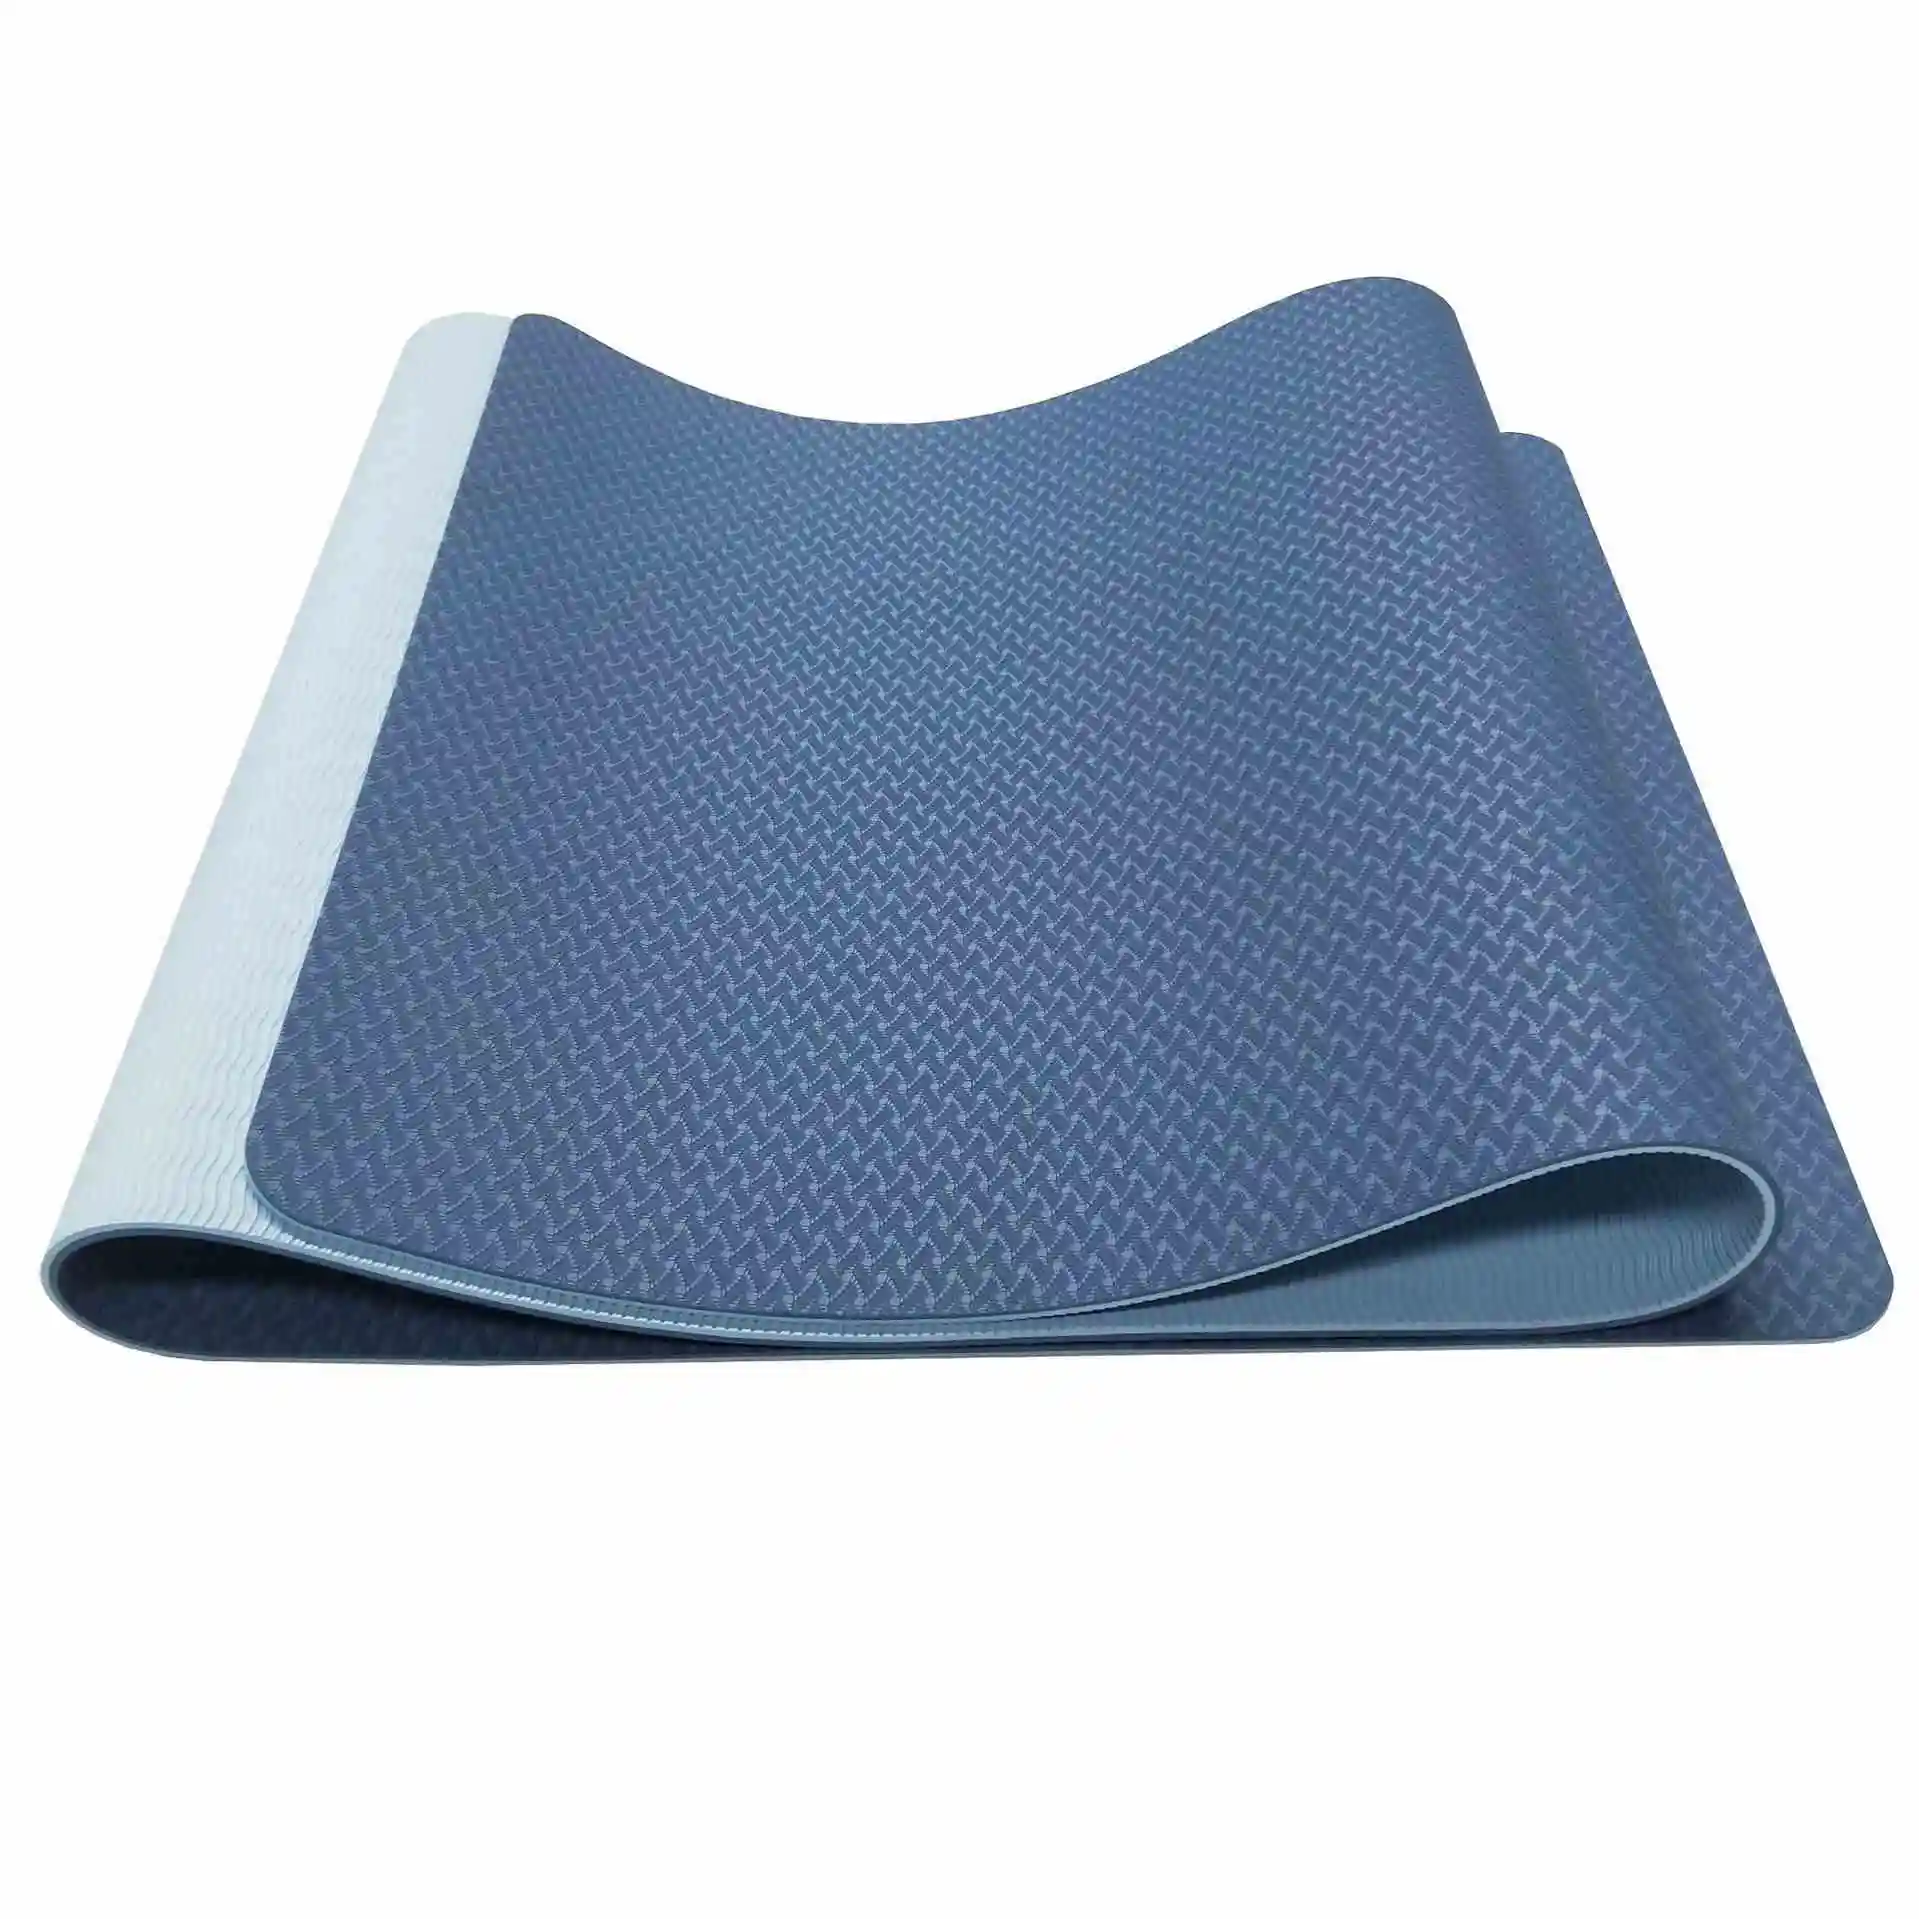 

Hot Sale new style nonslip custom yoga mat set From China